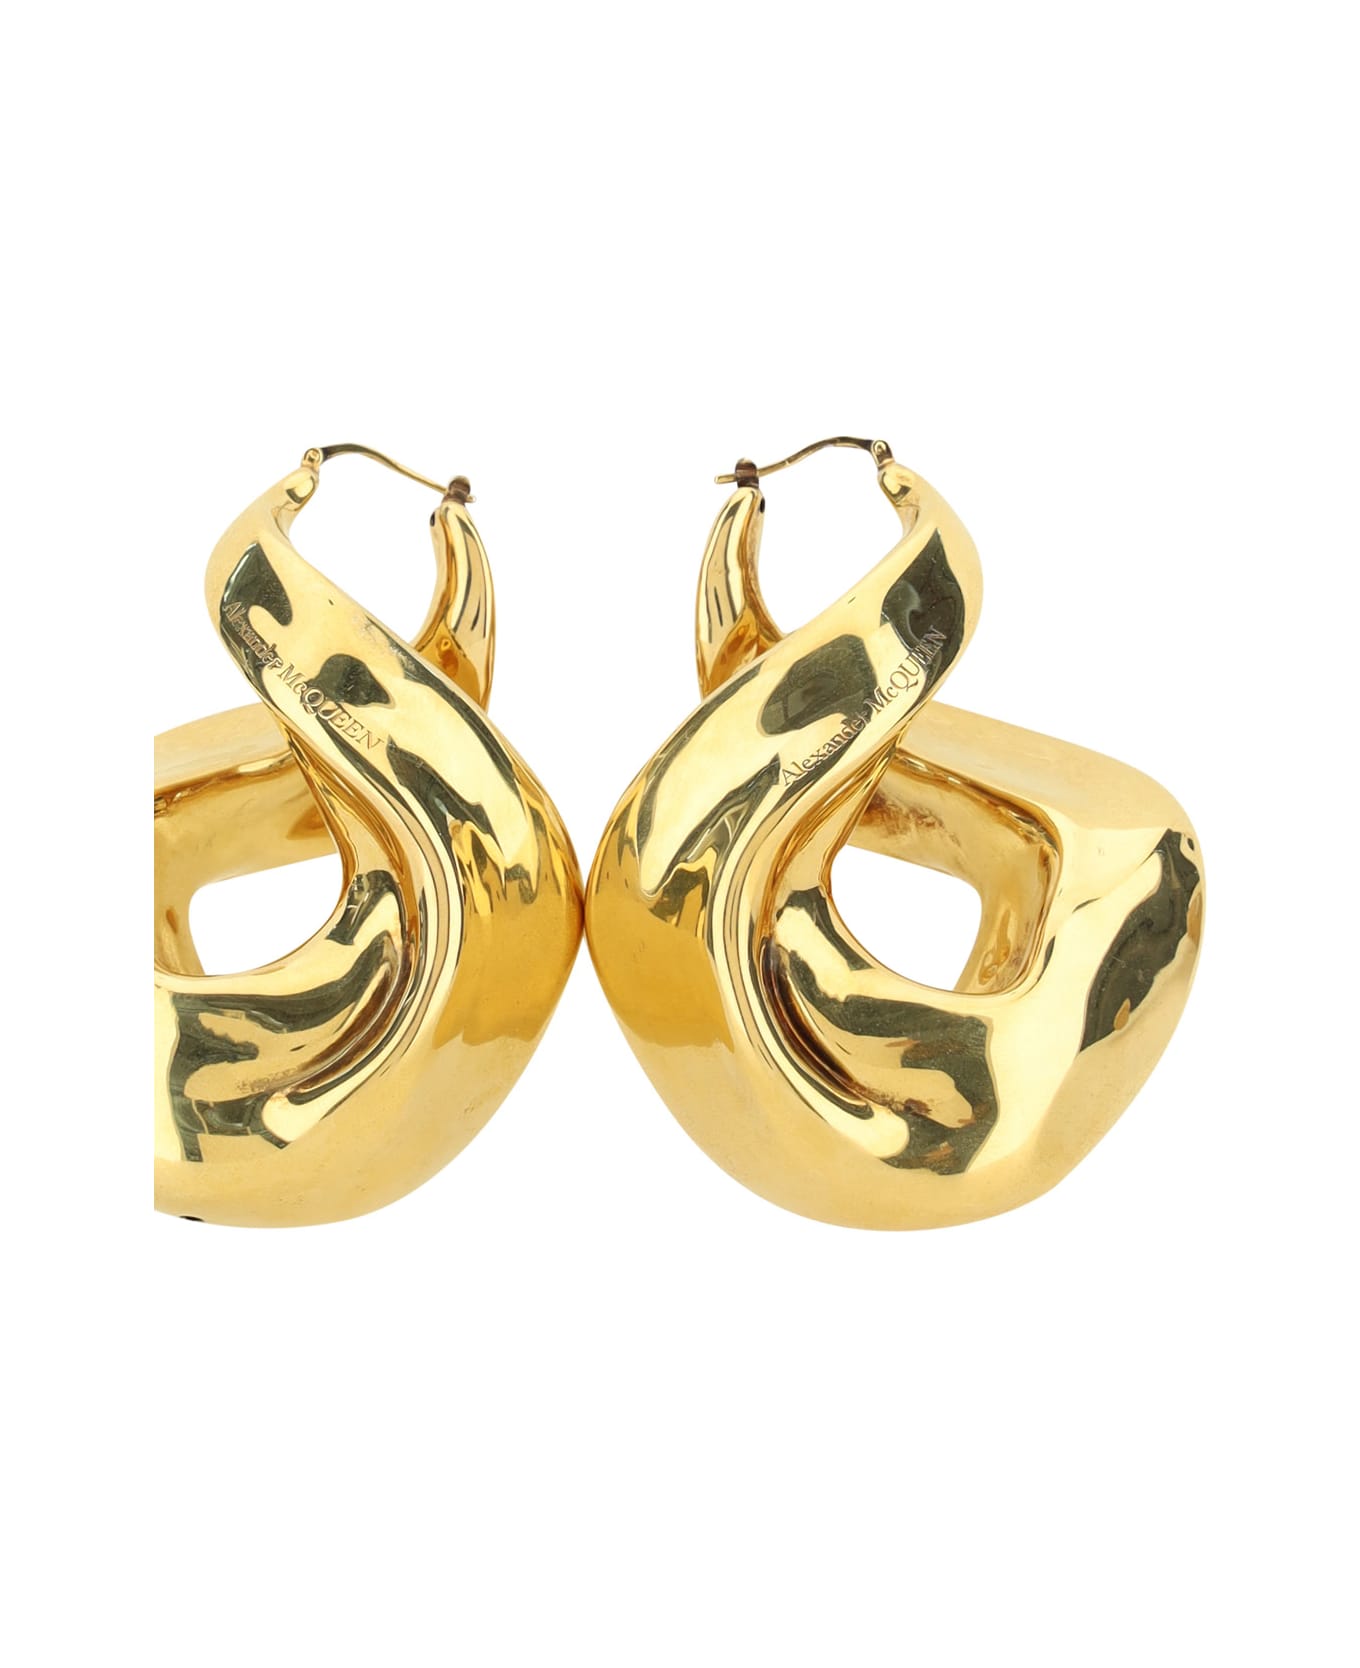 Alexander McQueen Twisted Earrings - Oro O.b Antl イヤリング